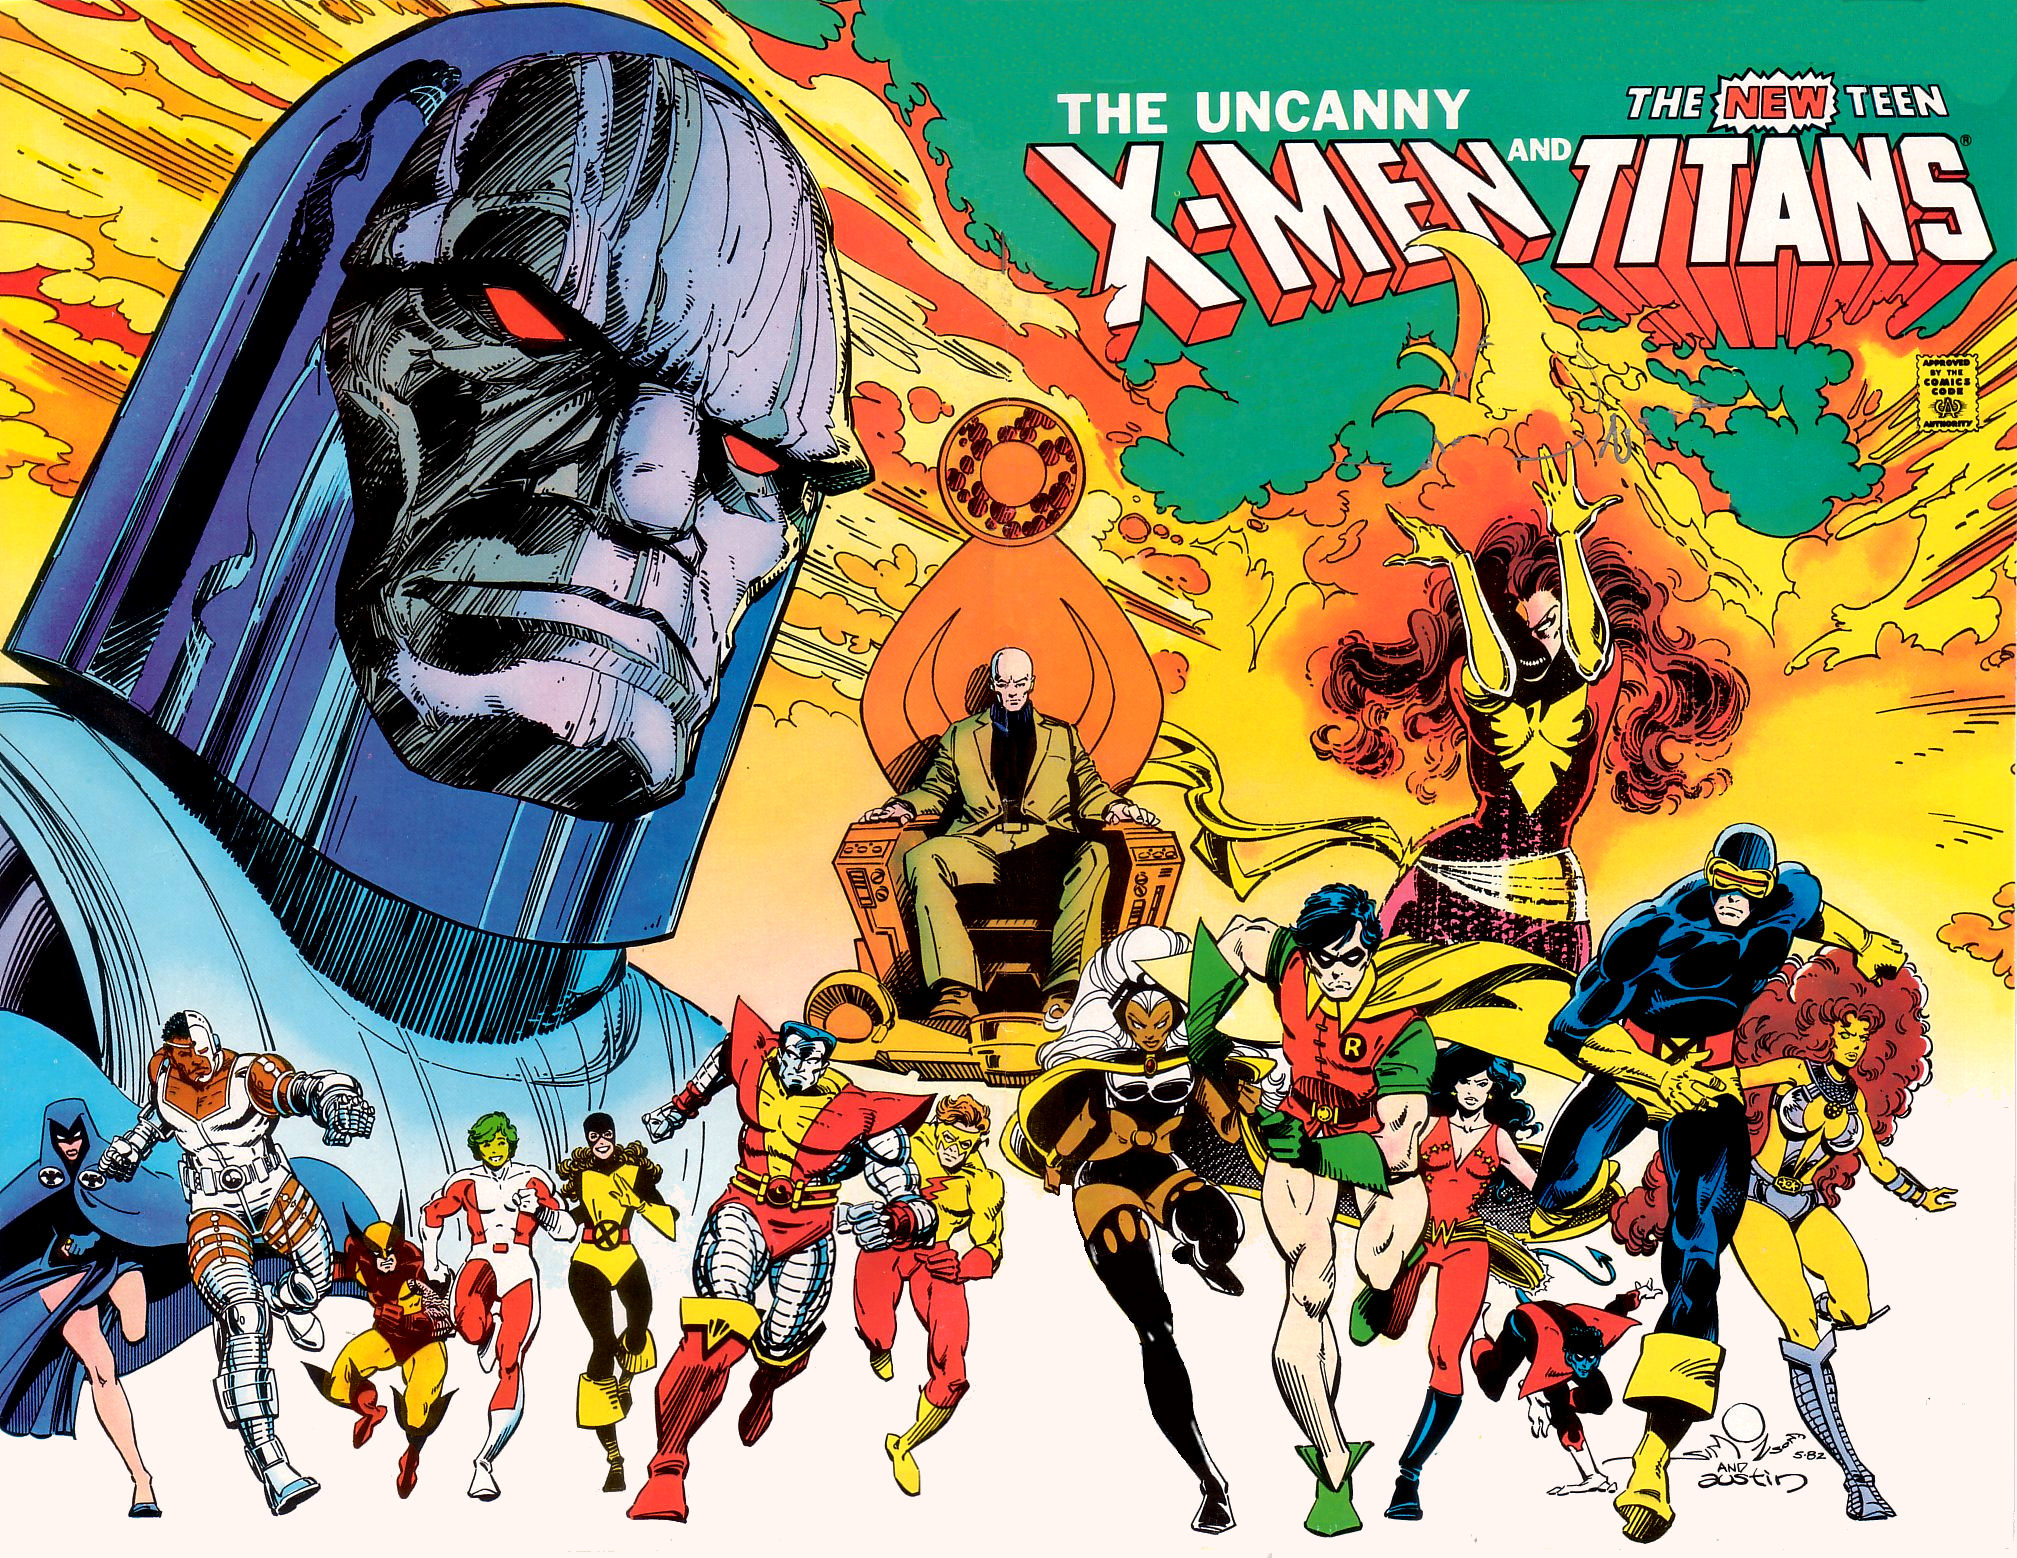 the uncanny x men and the new teen titans, comics, beast boy, charles xavier, colossus, cyborg (dc comics), cyclops (marvel comics), dark phoenix, darkseid (dc comics), dc comics, donna troy, garfield logan, jean grey, kid flash, kitty pryde, nightcrawler (marvel comics), phoenix (marvel comics), professor x, robin (dc comics), starfire (dc comics), storm (marvel comics), teen titans, uncanny x men, wally west, wolverine, wonder girl